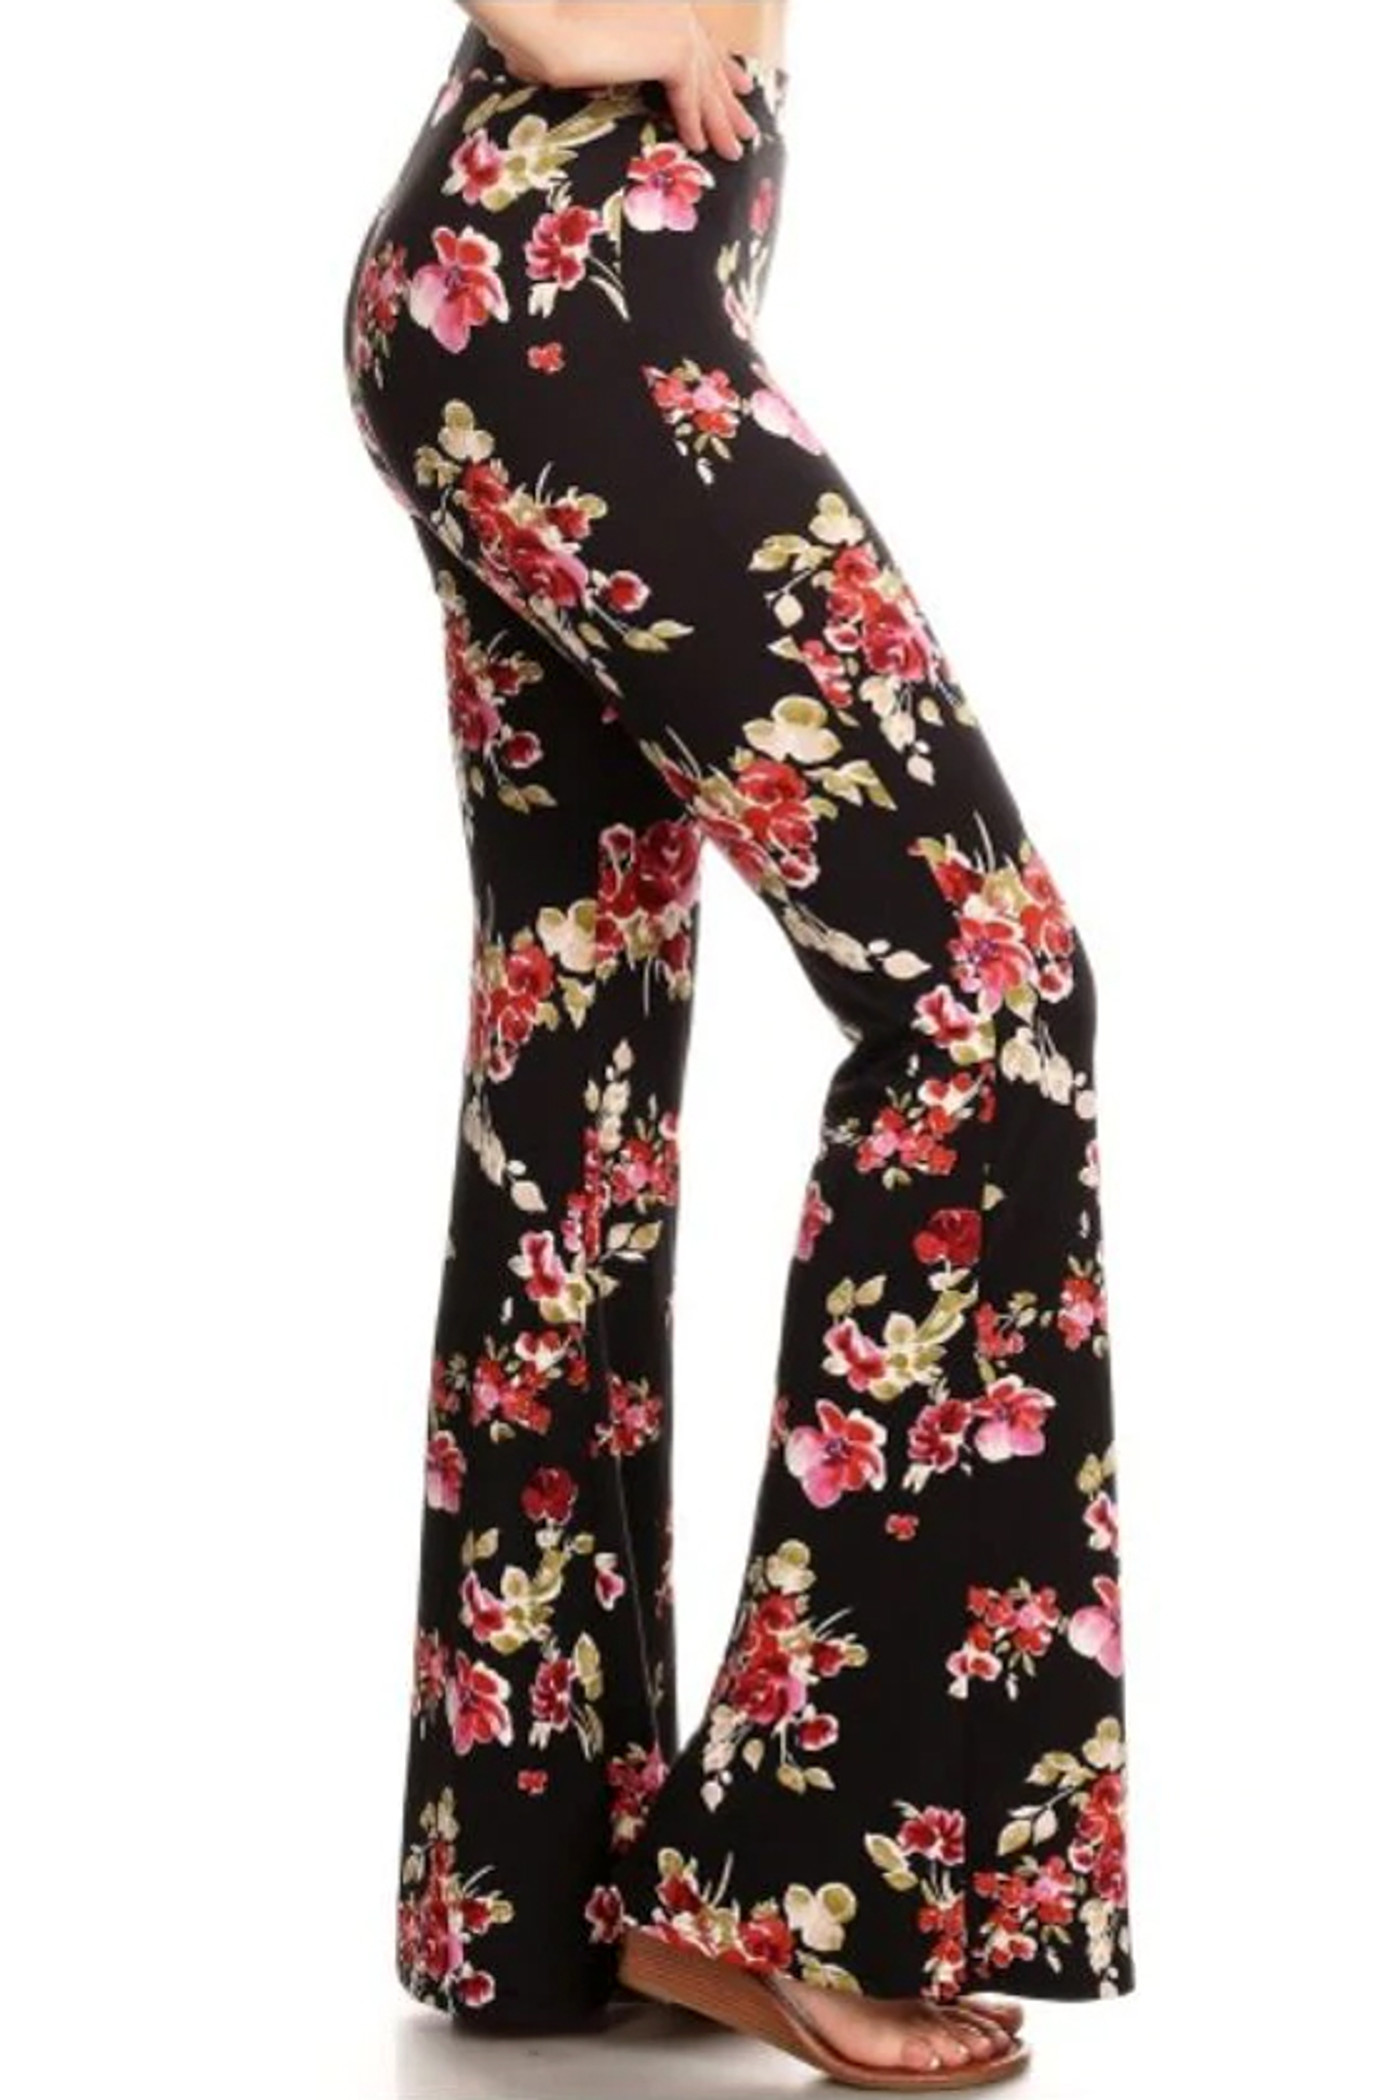 XFLWAM Women's Floral Boho Elastic High Waisted Leggings Flare Leg Bell  Bottom Long Wide Leg Pants Trousers Pink S 